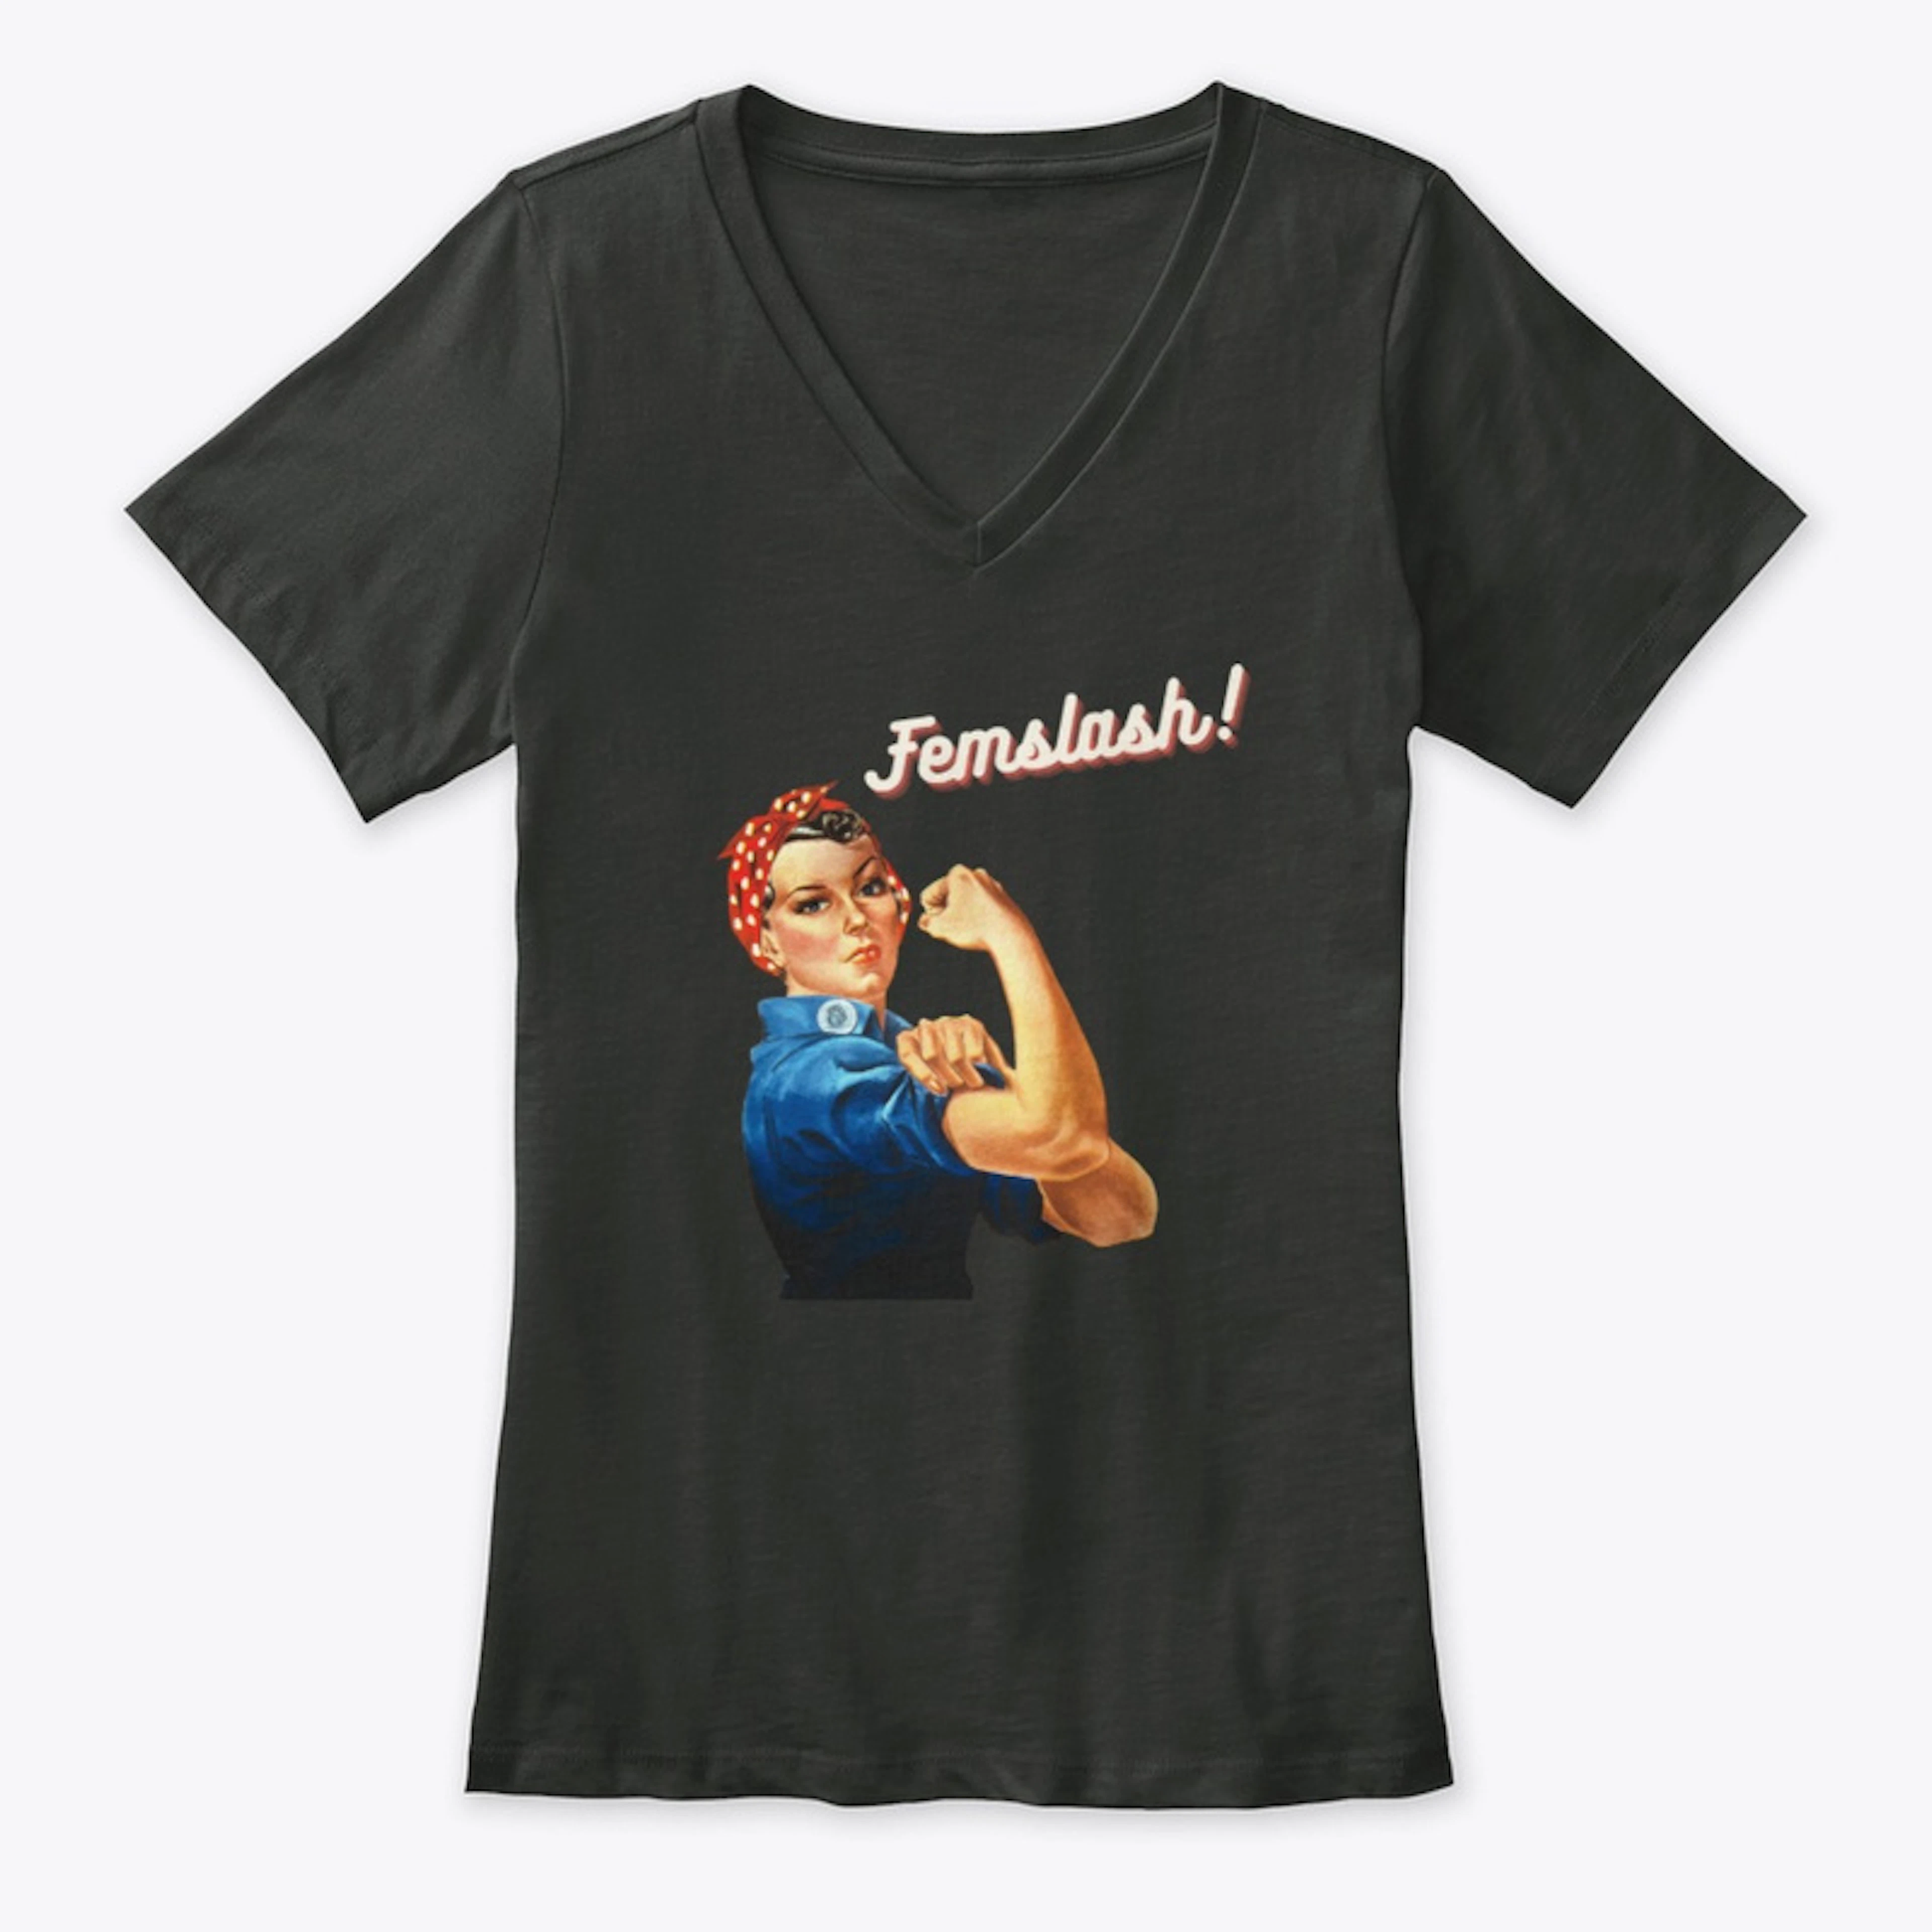 Rosie the Riveter Femslash Fanfic design